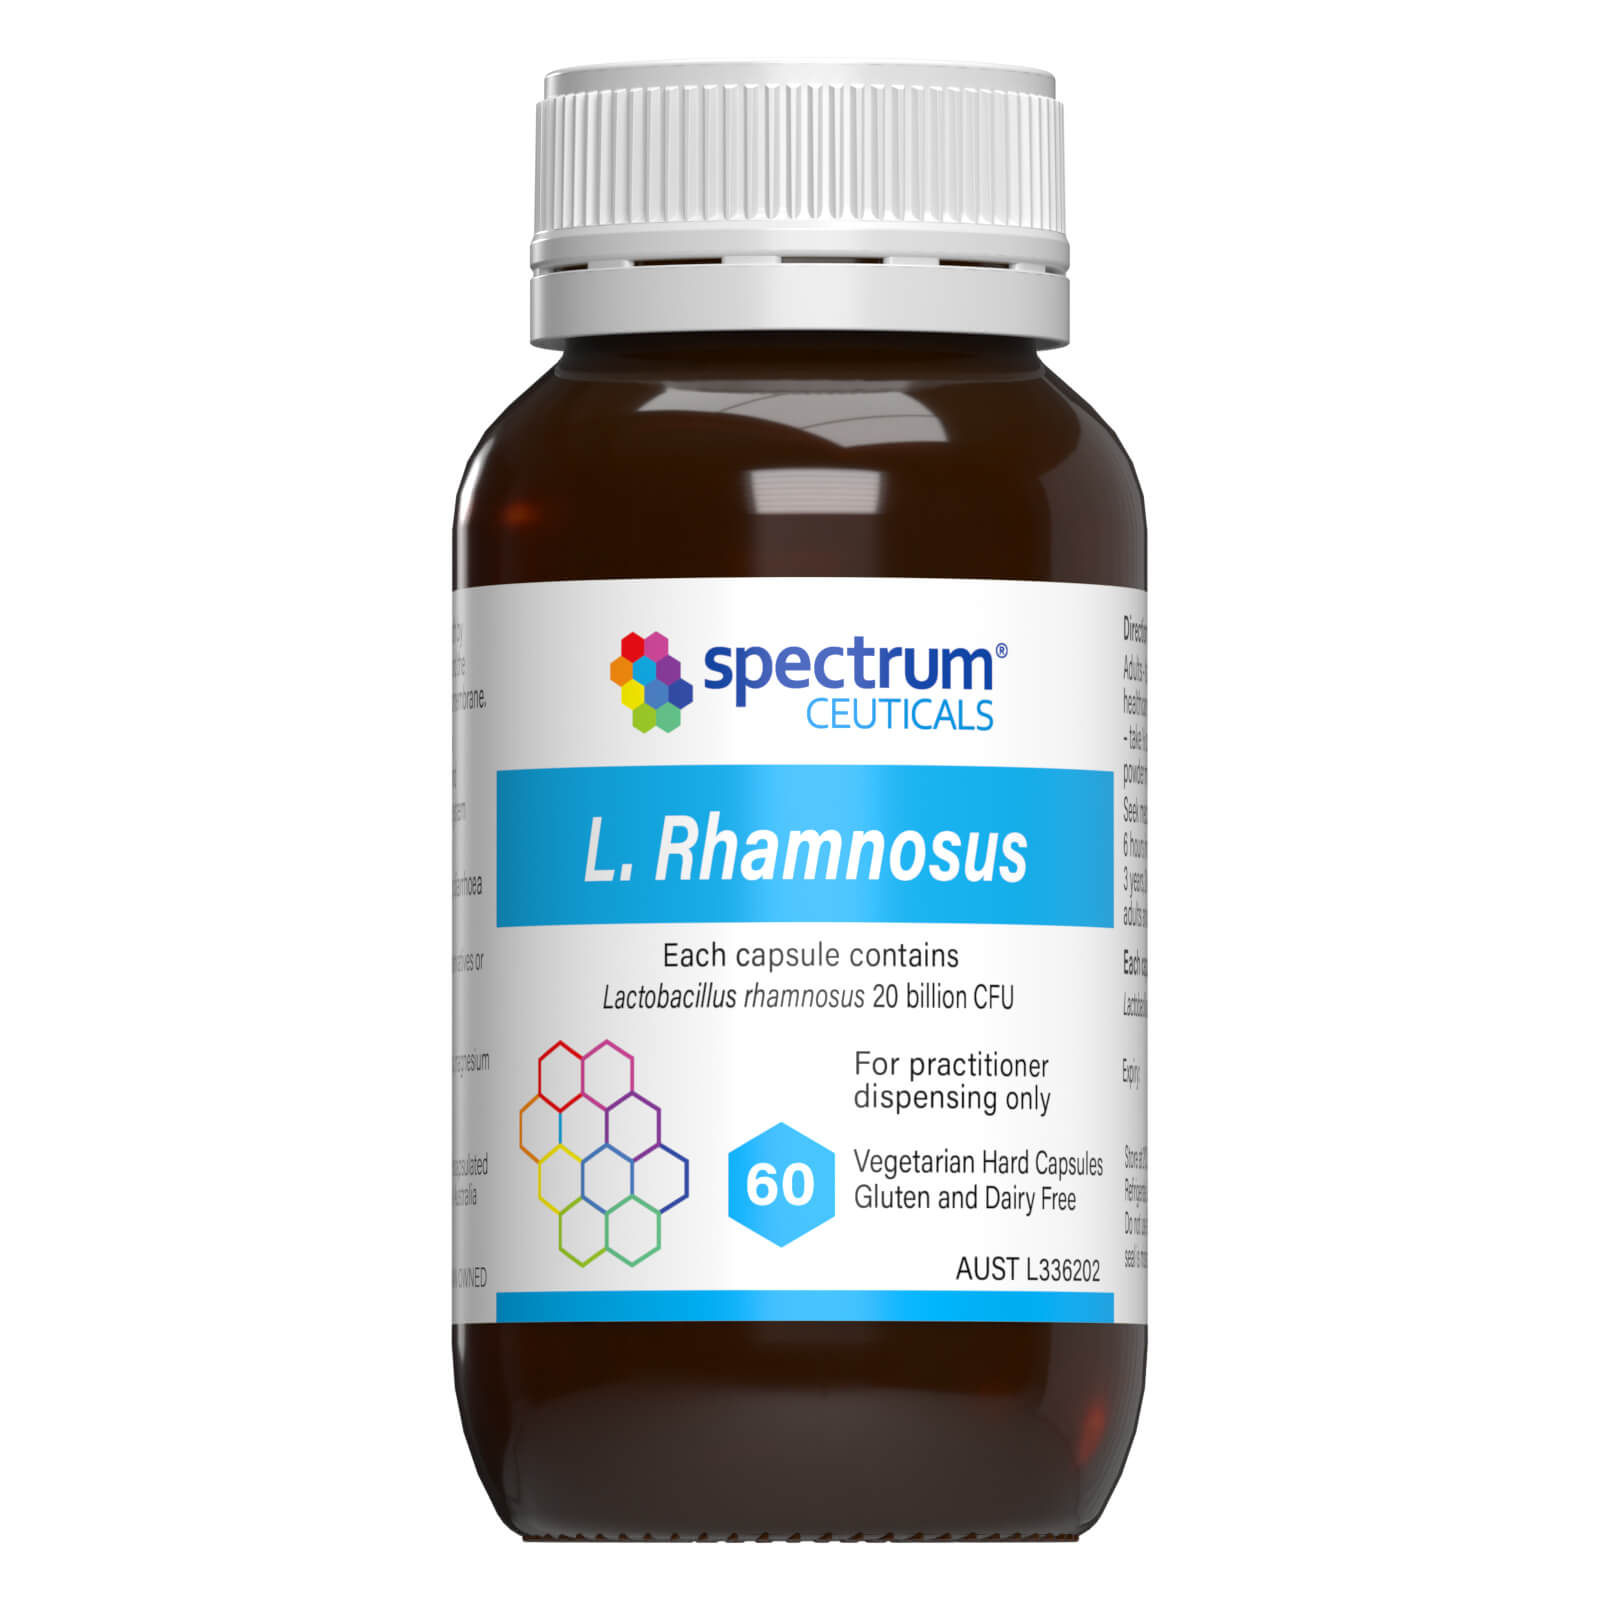 L. Rhamnosus GG (LGG) Probiotic – Harrison Nutrition & Wellbeing